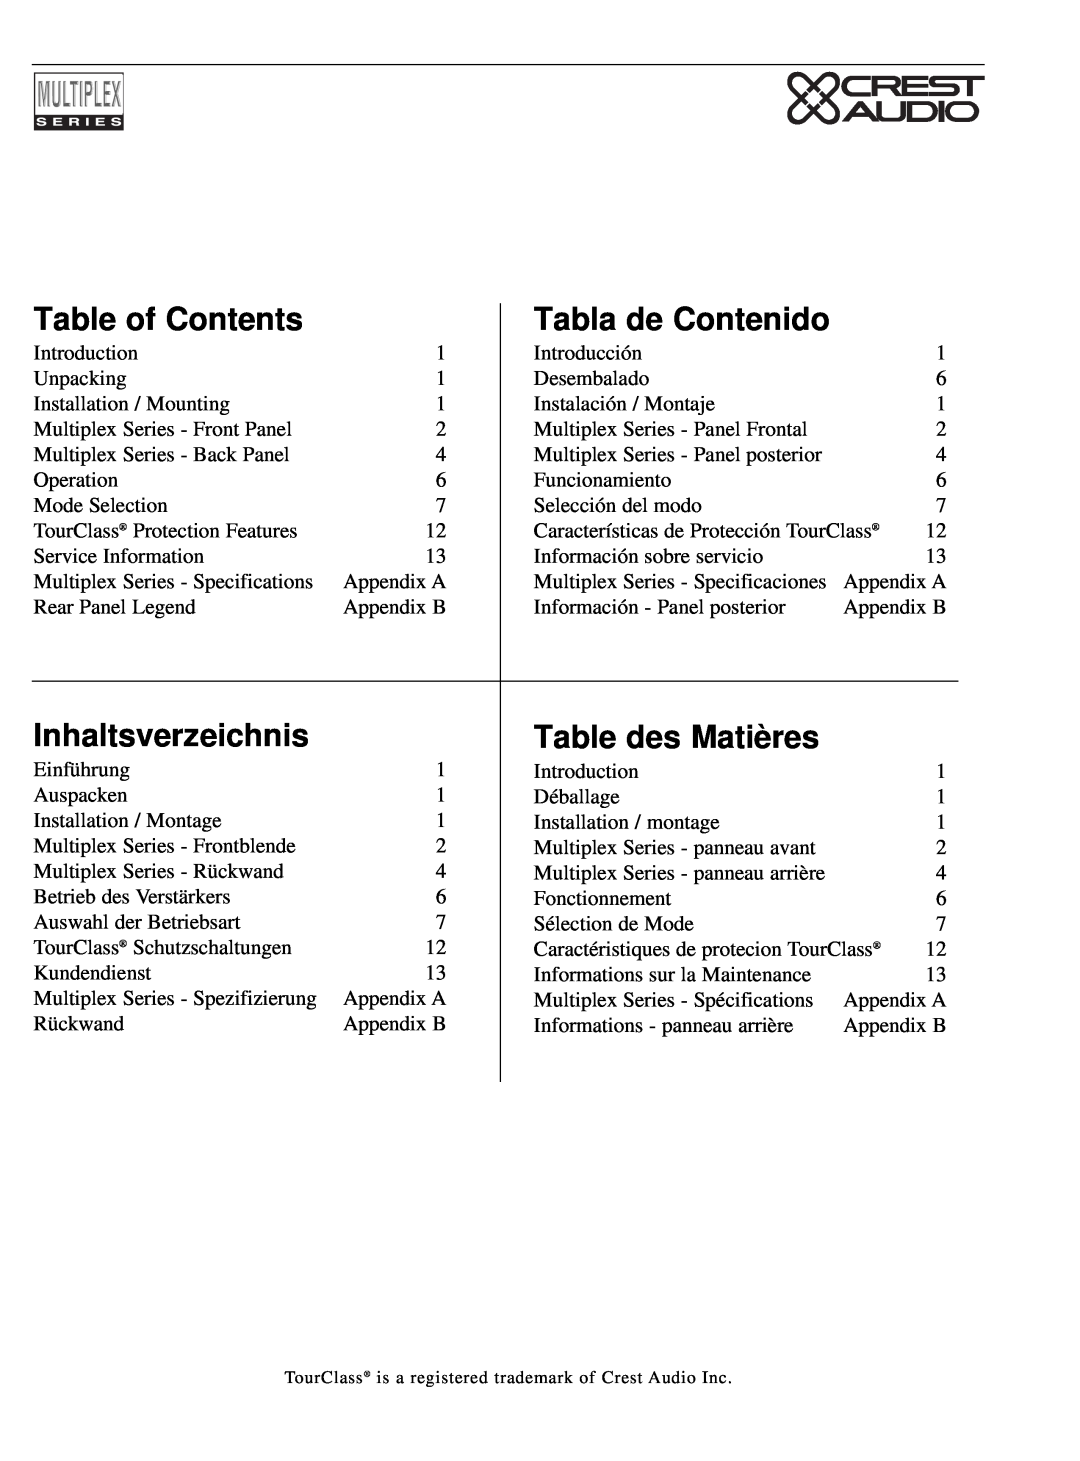 Peavey Multiplex Series owner manual Table of Contents, Tabla de Contenido, Inhaltsverzeichnis, Table des Matières 